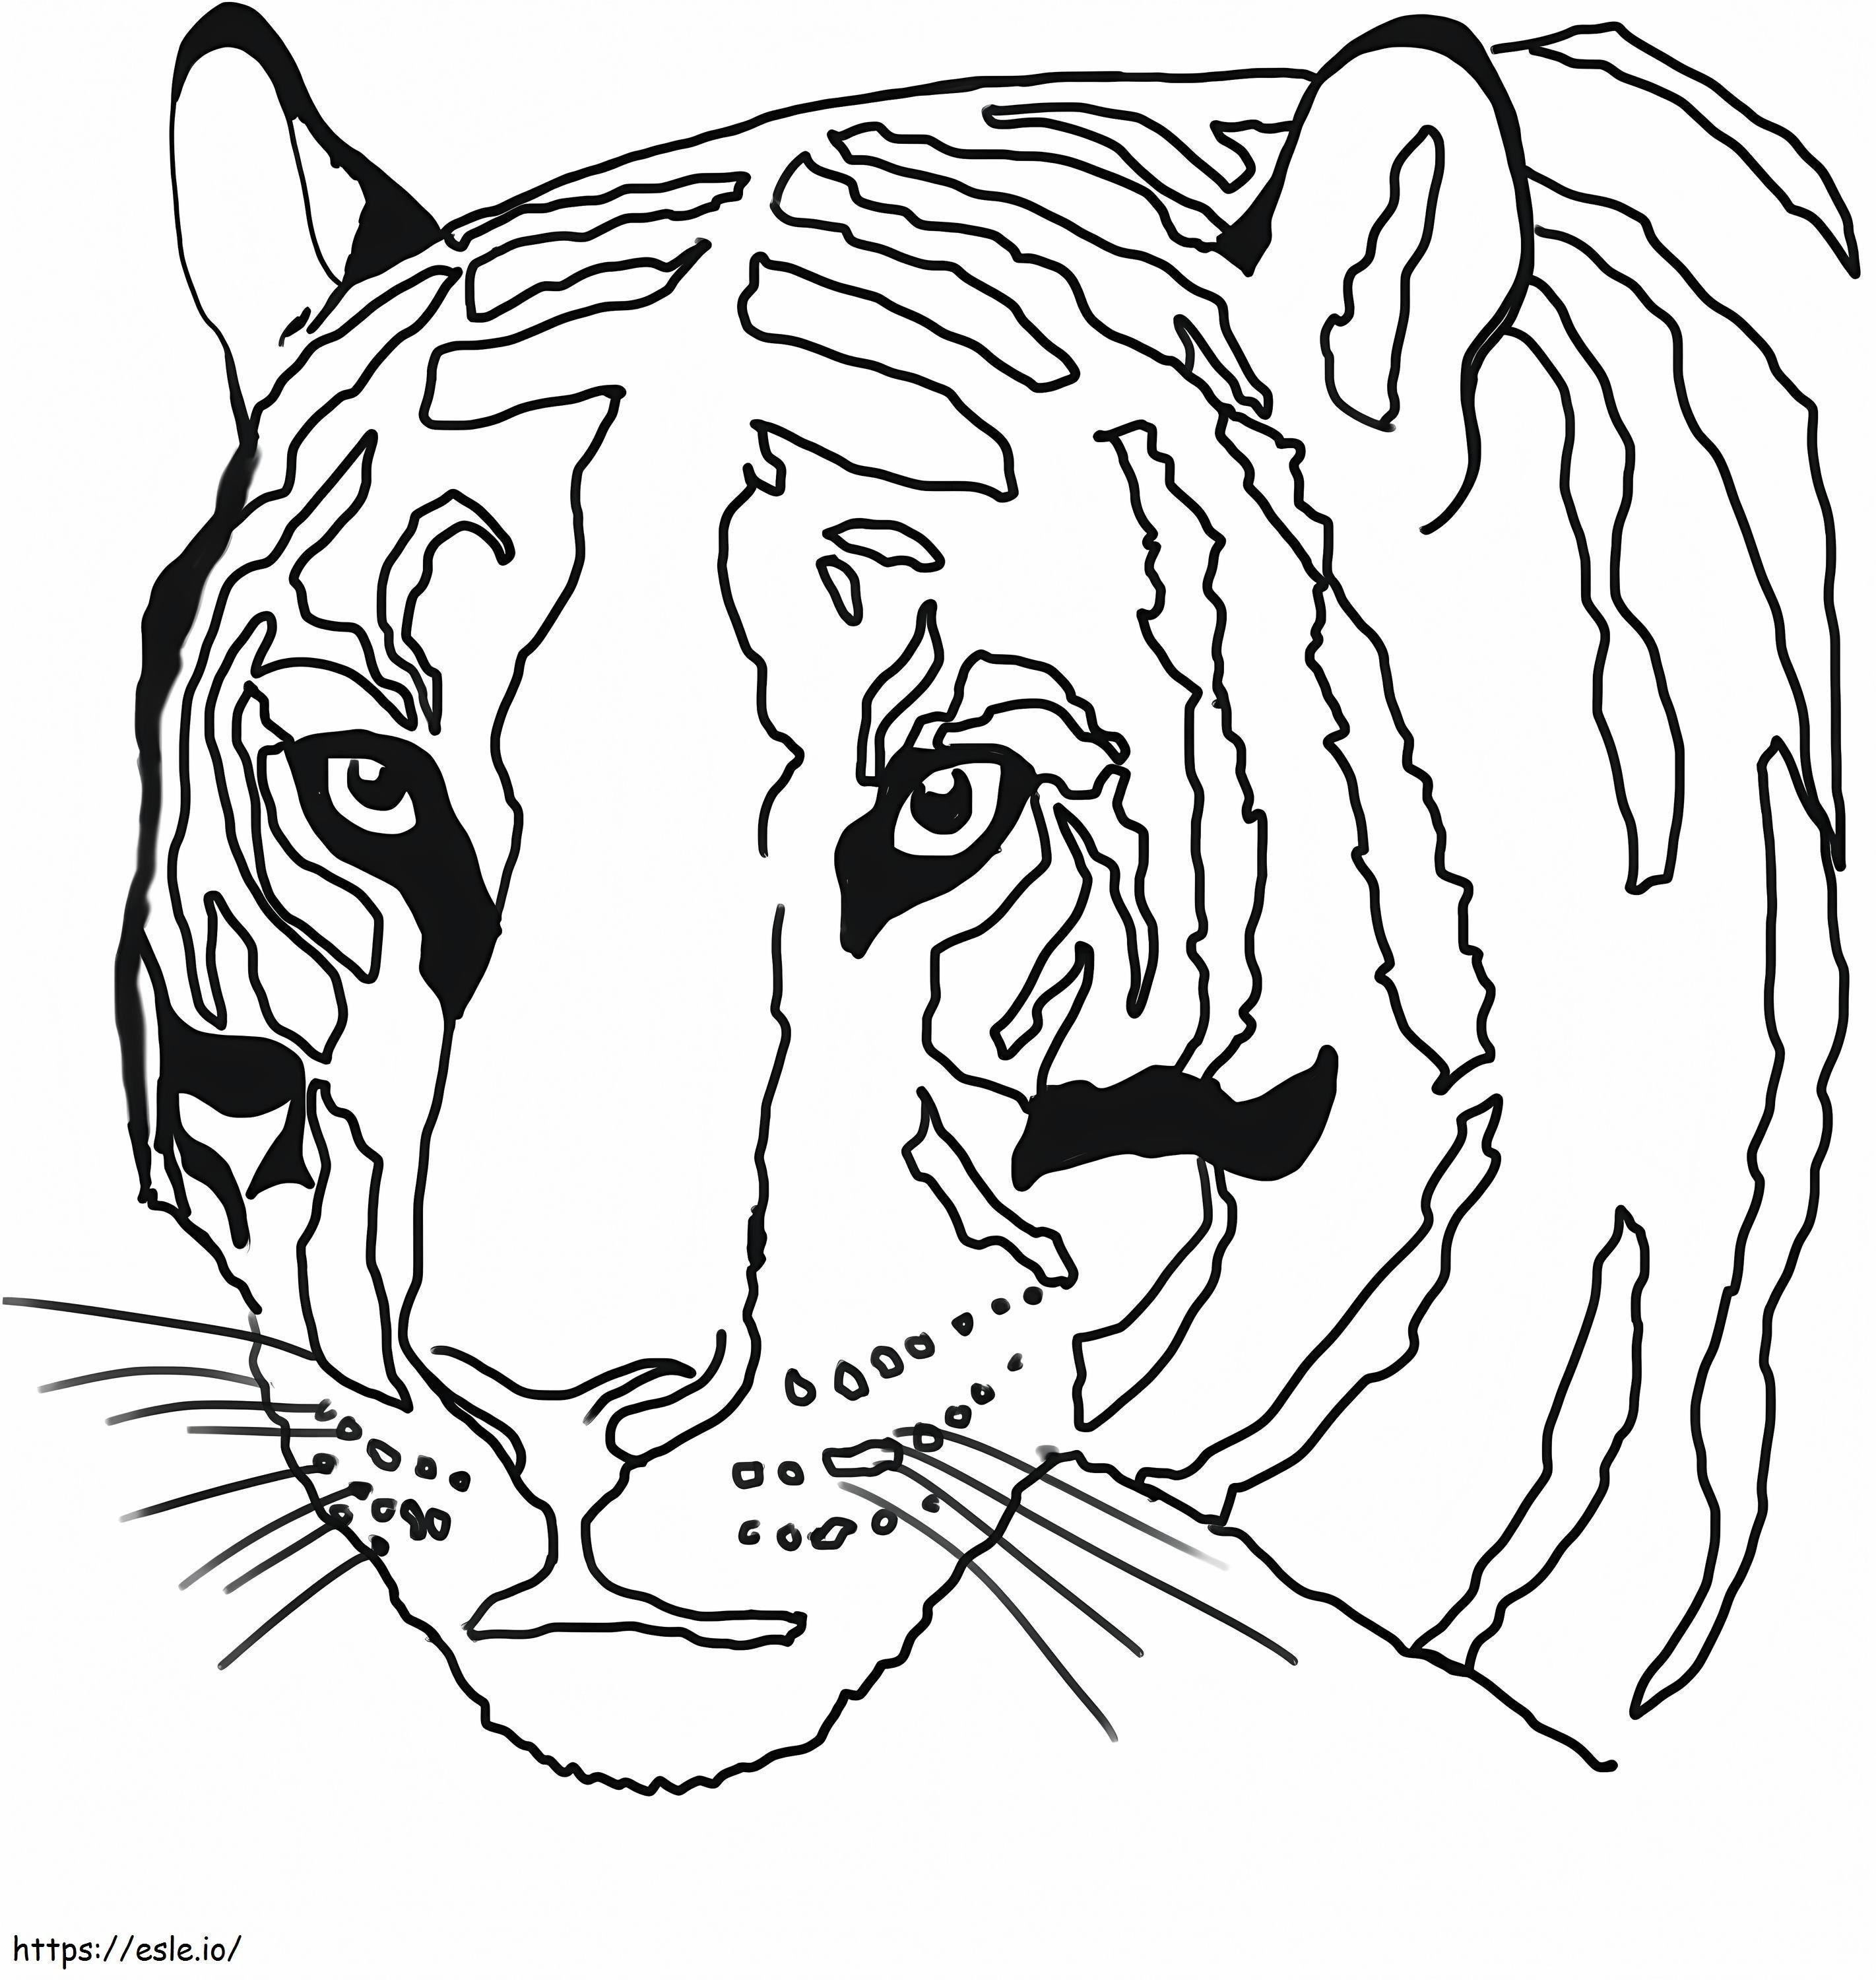 Cabeça de tigre para colorir